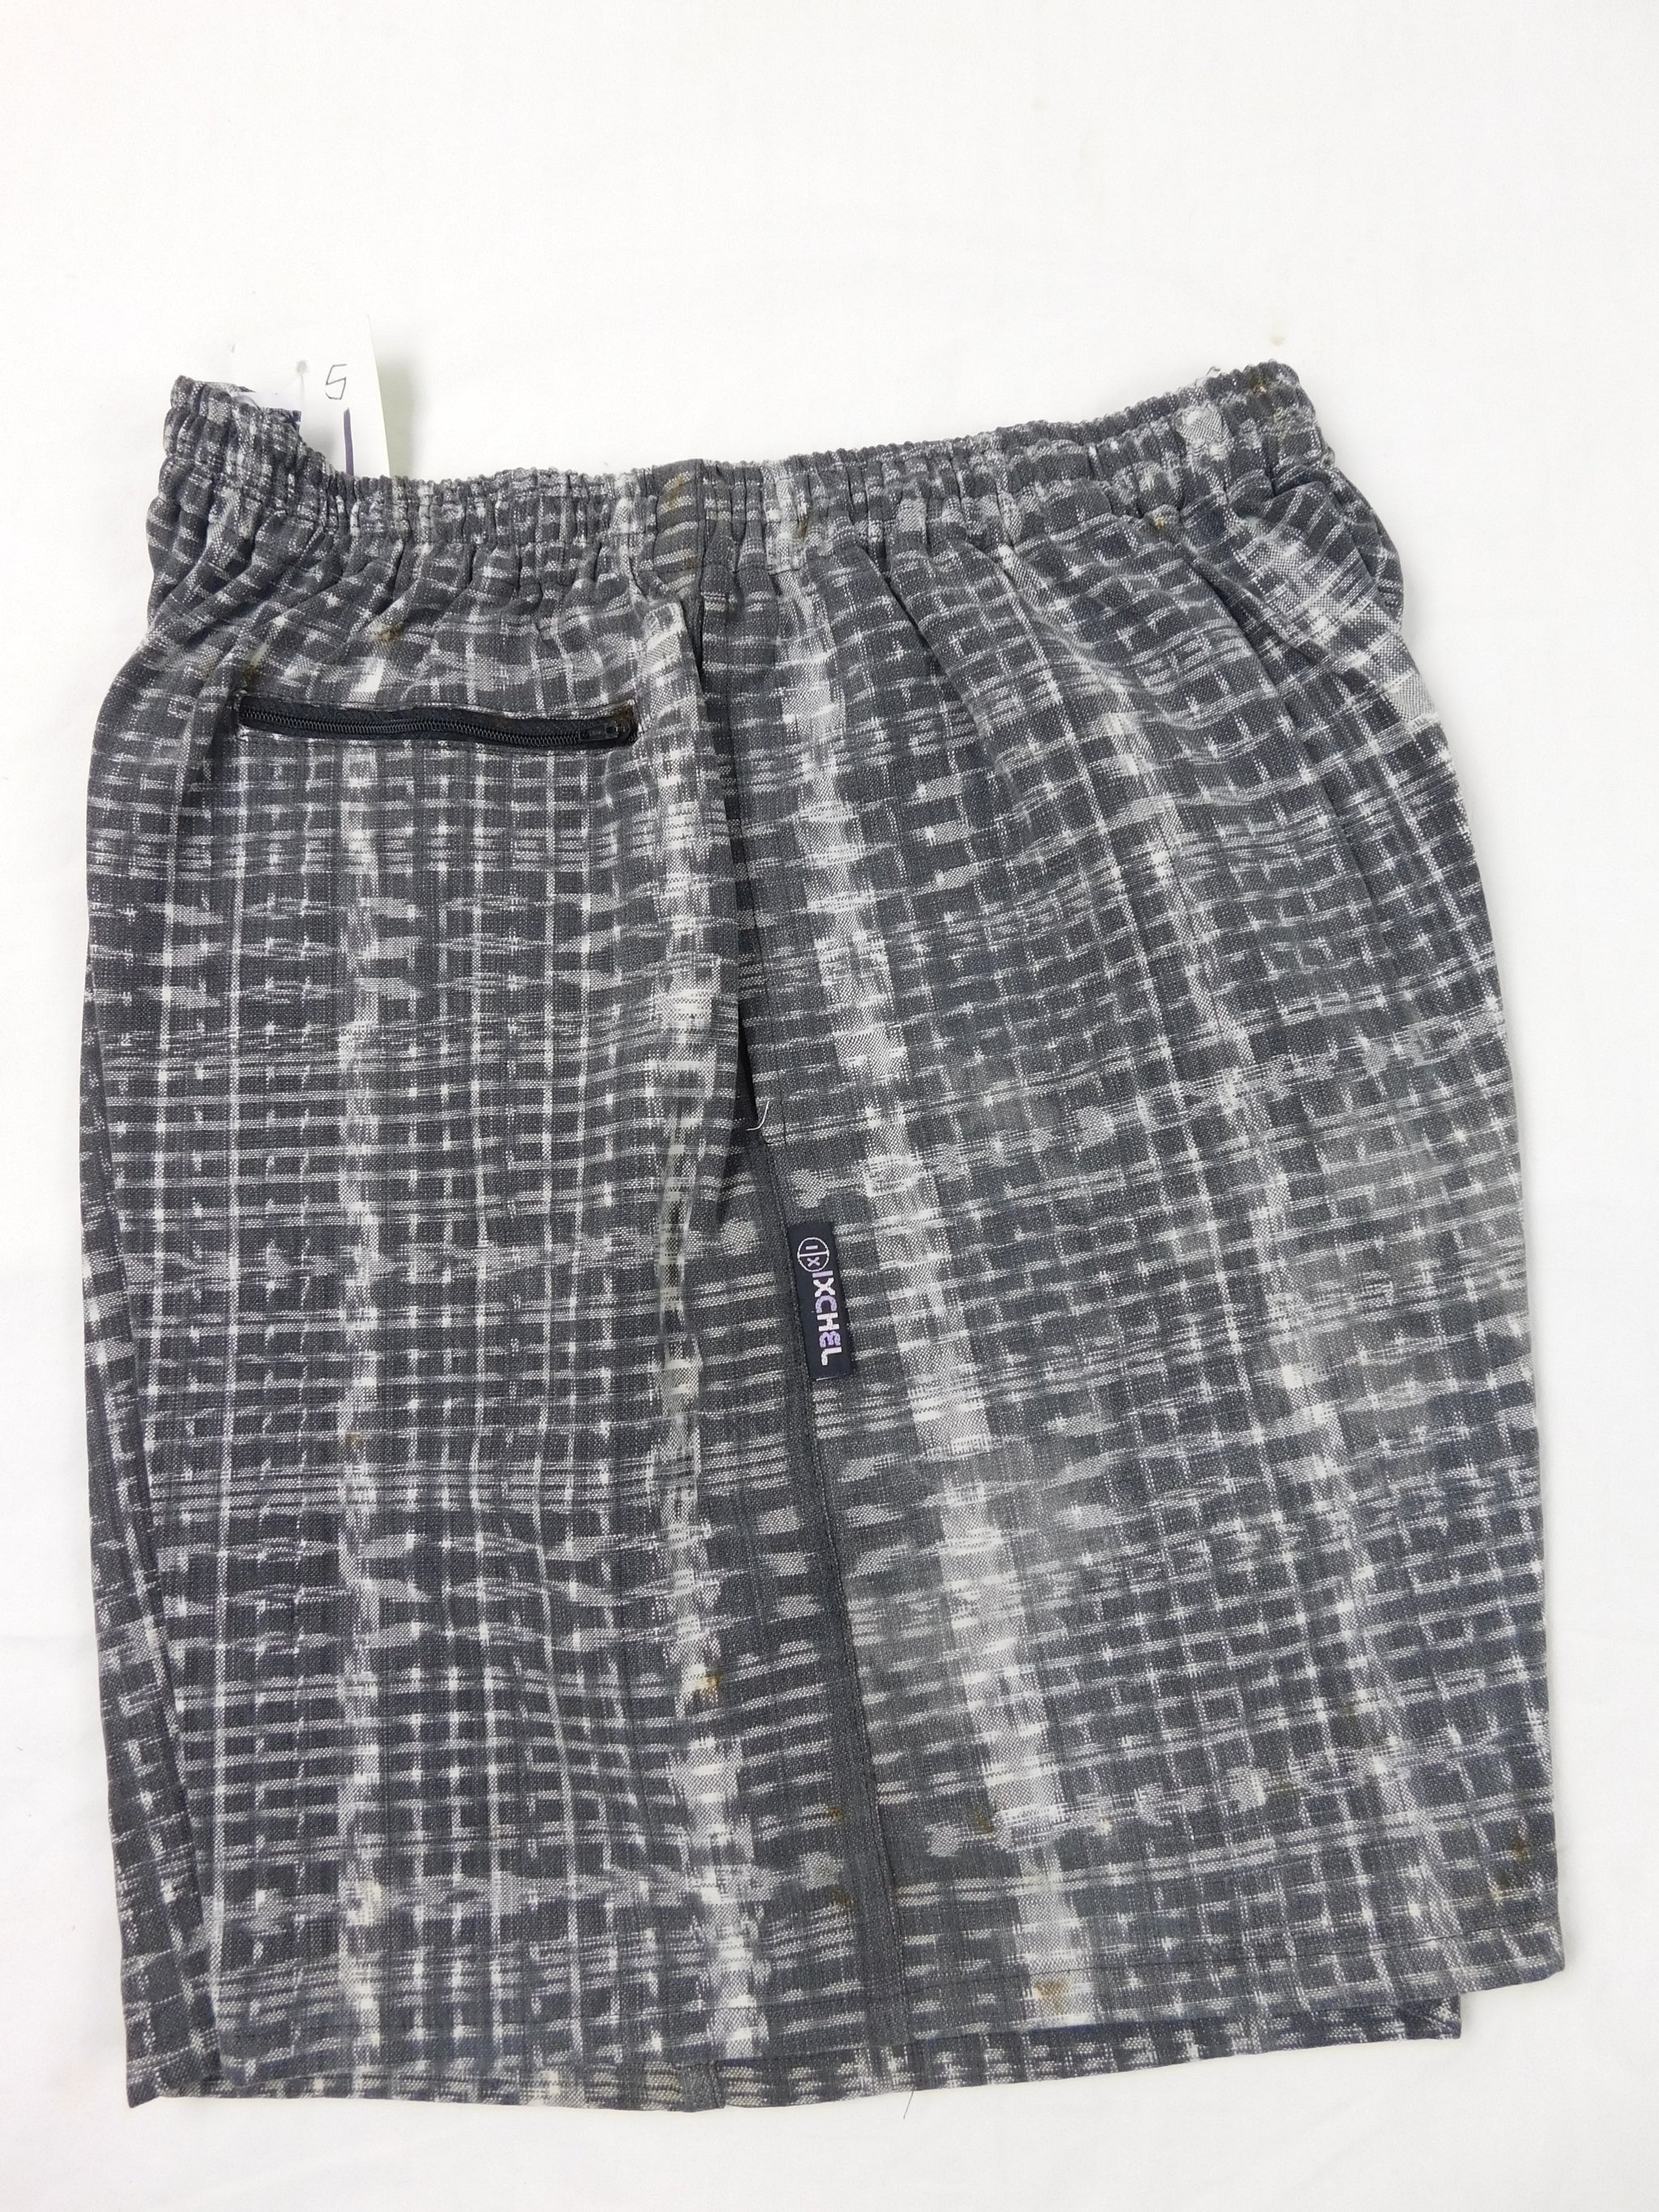 Copy of Women's Hand-Woven Summer Shorts